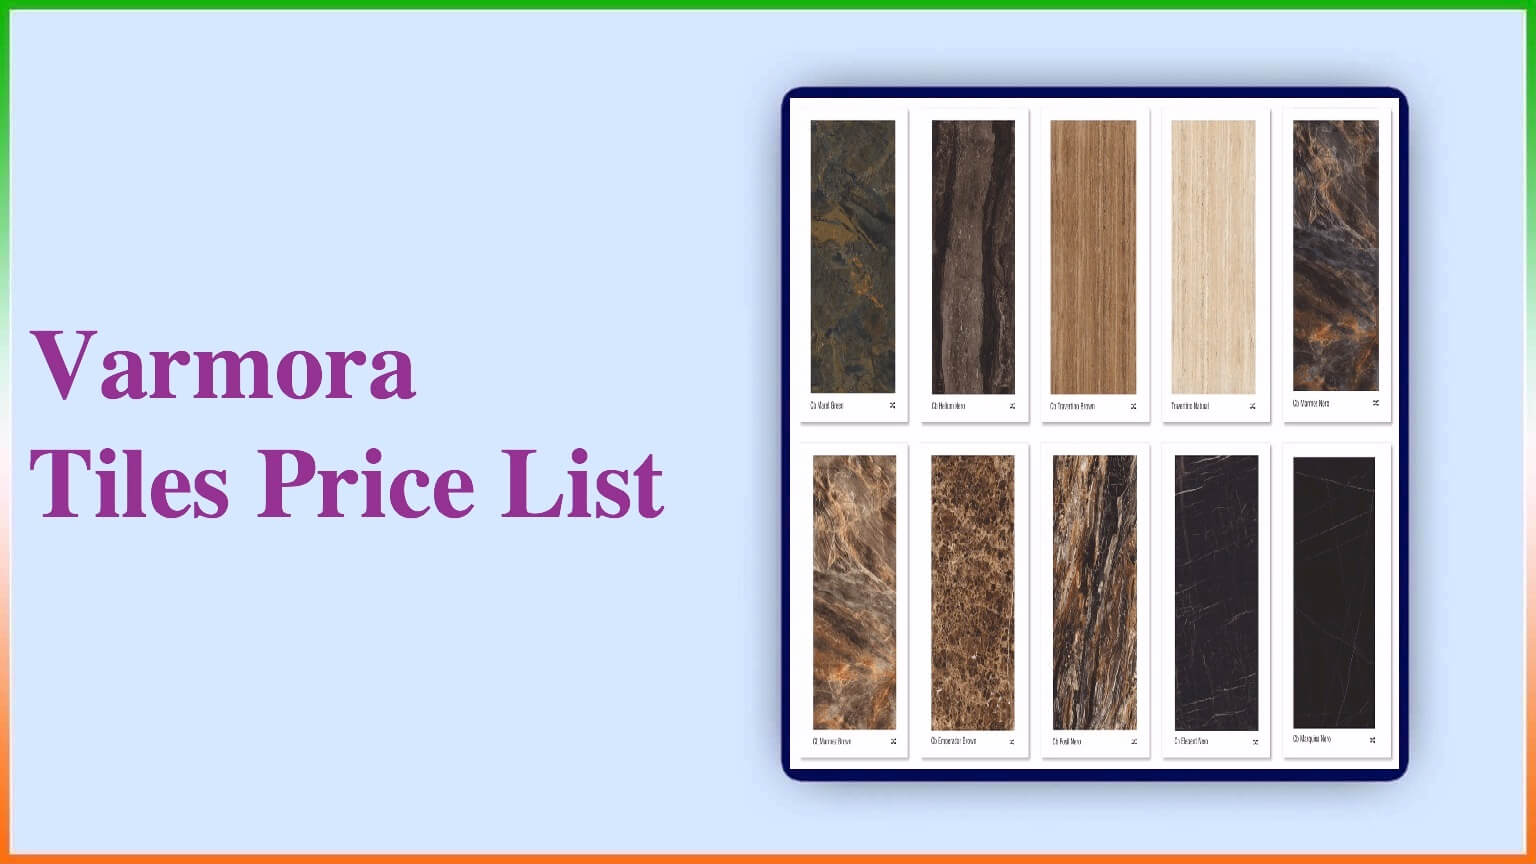 Varmora Tiles Price List